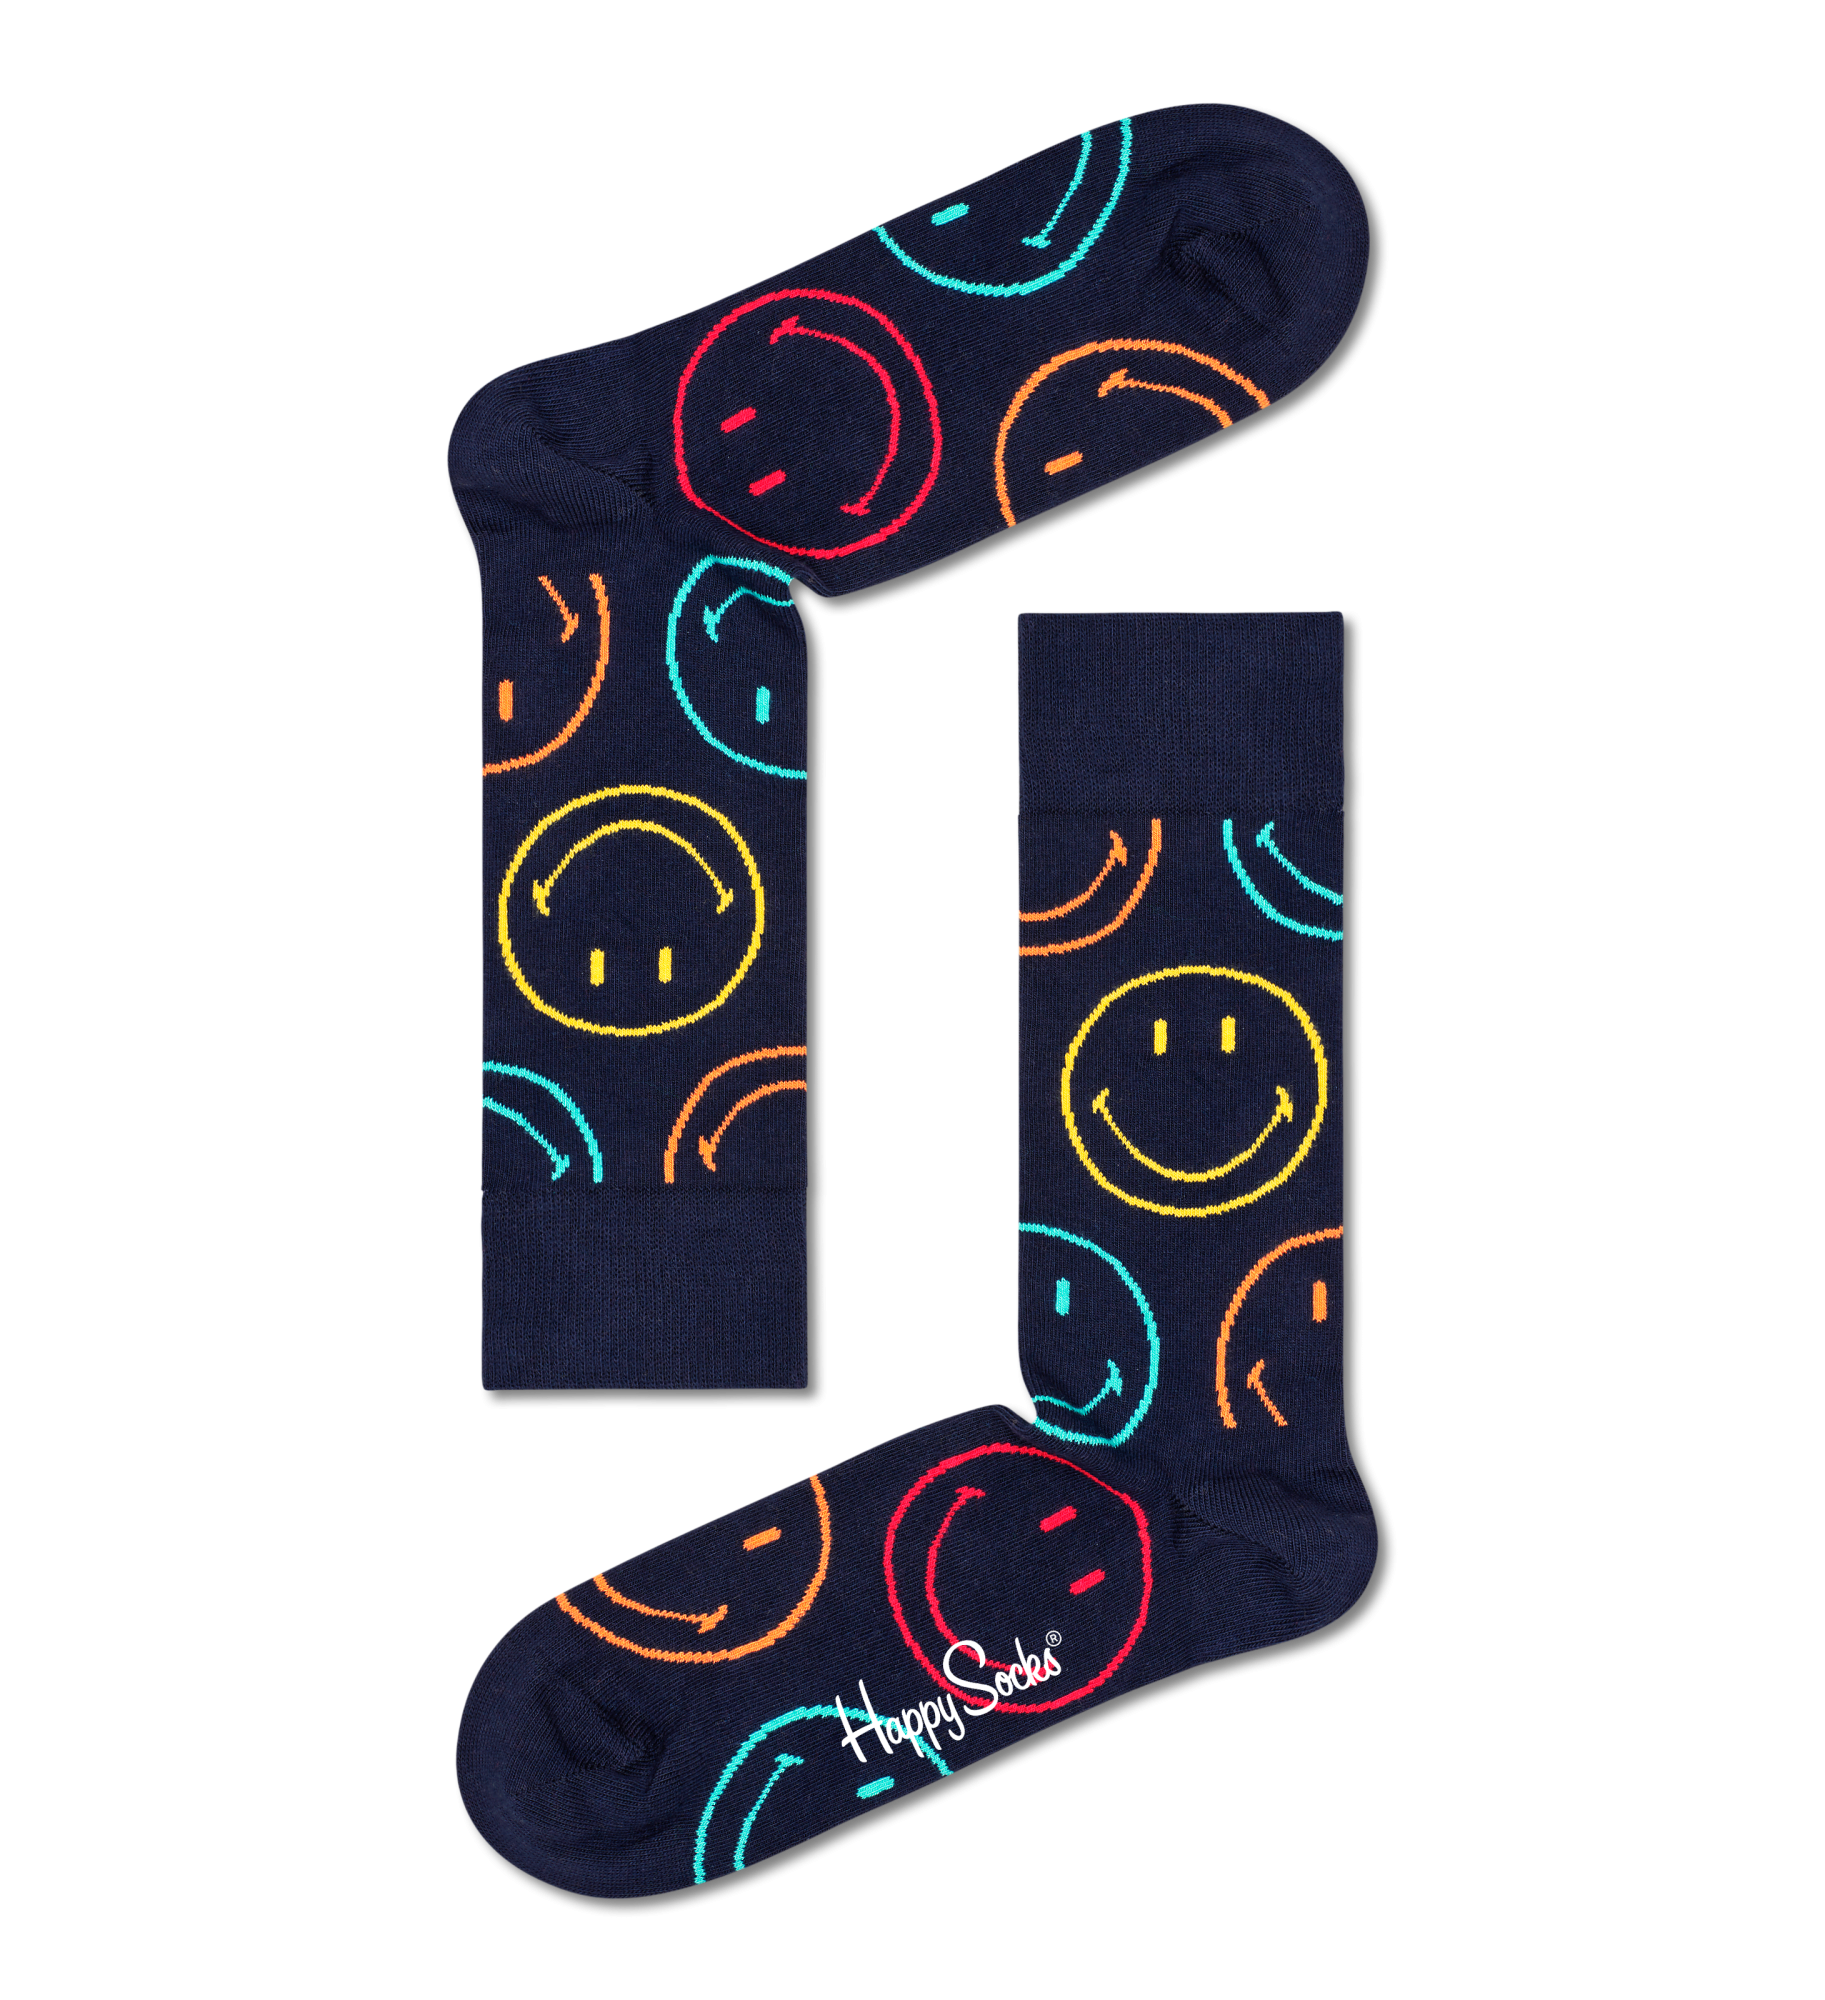 Носки Happy socks collaboration Distorted Smiley Sock SMY01 6501, размер 29